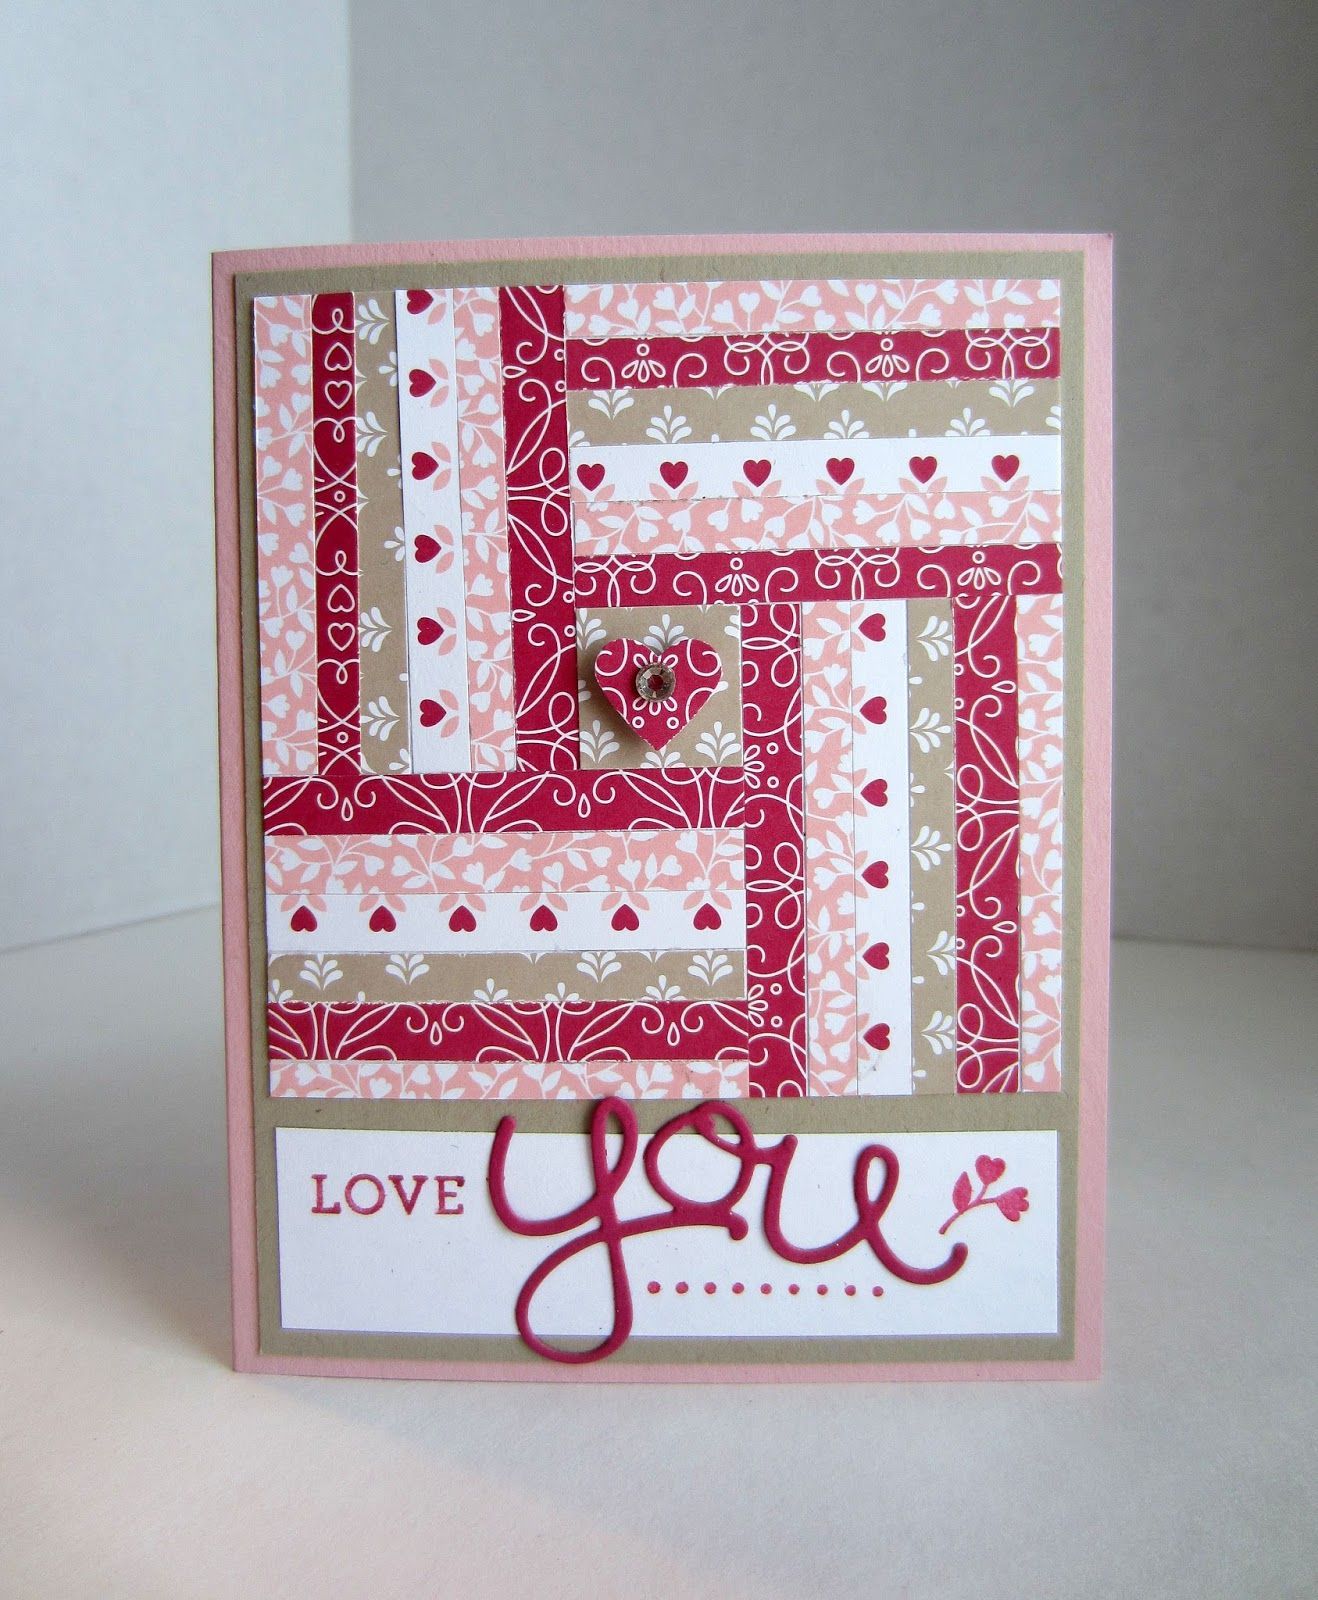 LOVE YOU QUILT -   24 valentine paper crafts
 ideas